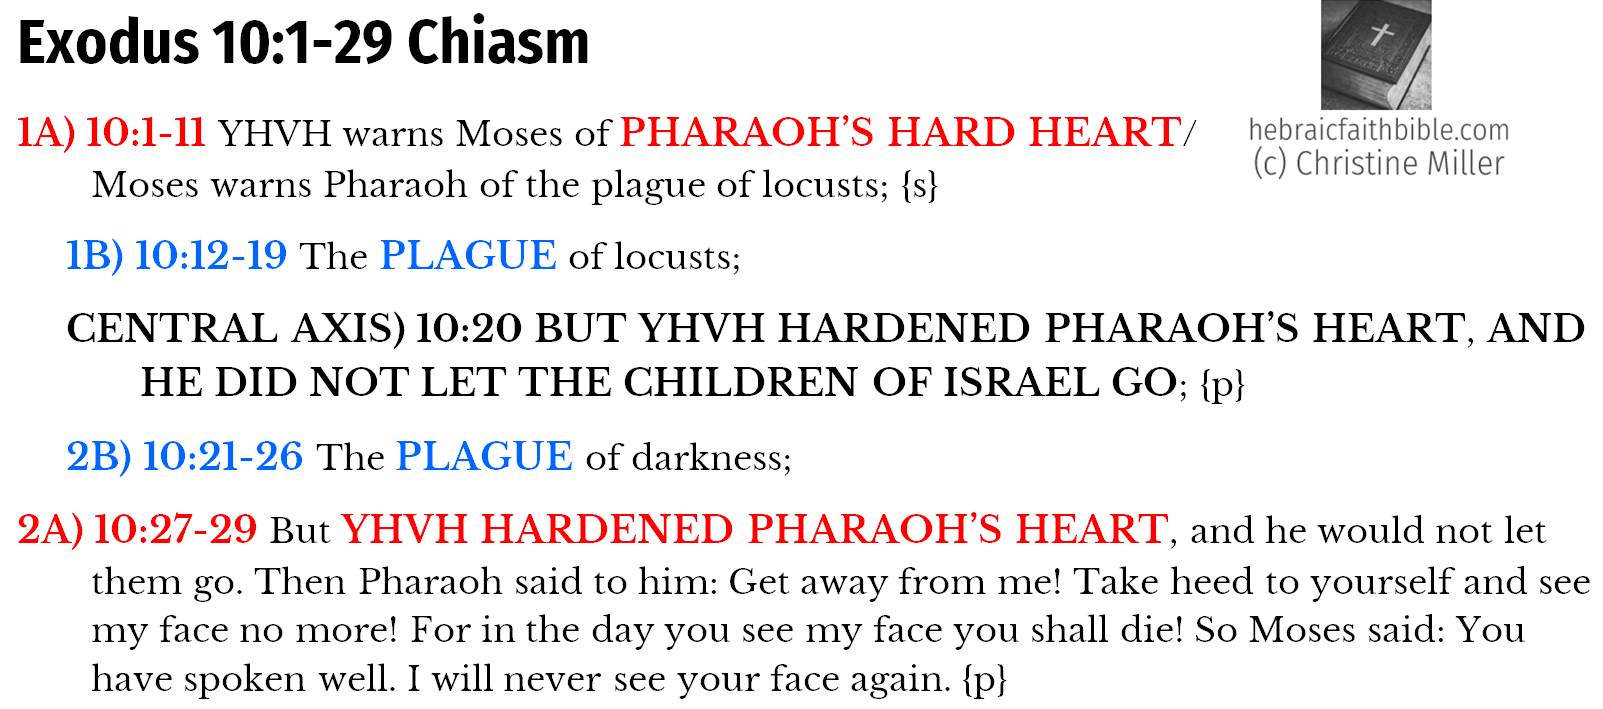 Exo 10:1-29 Chiasm | hebraicfaithbible.com